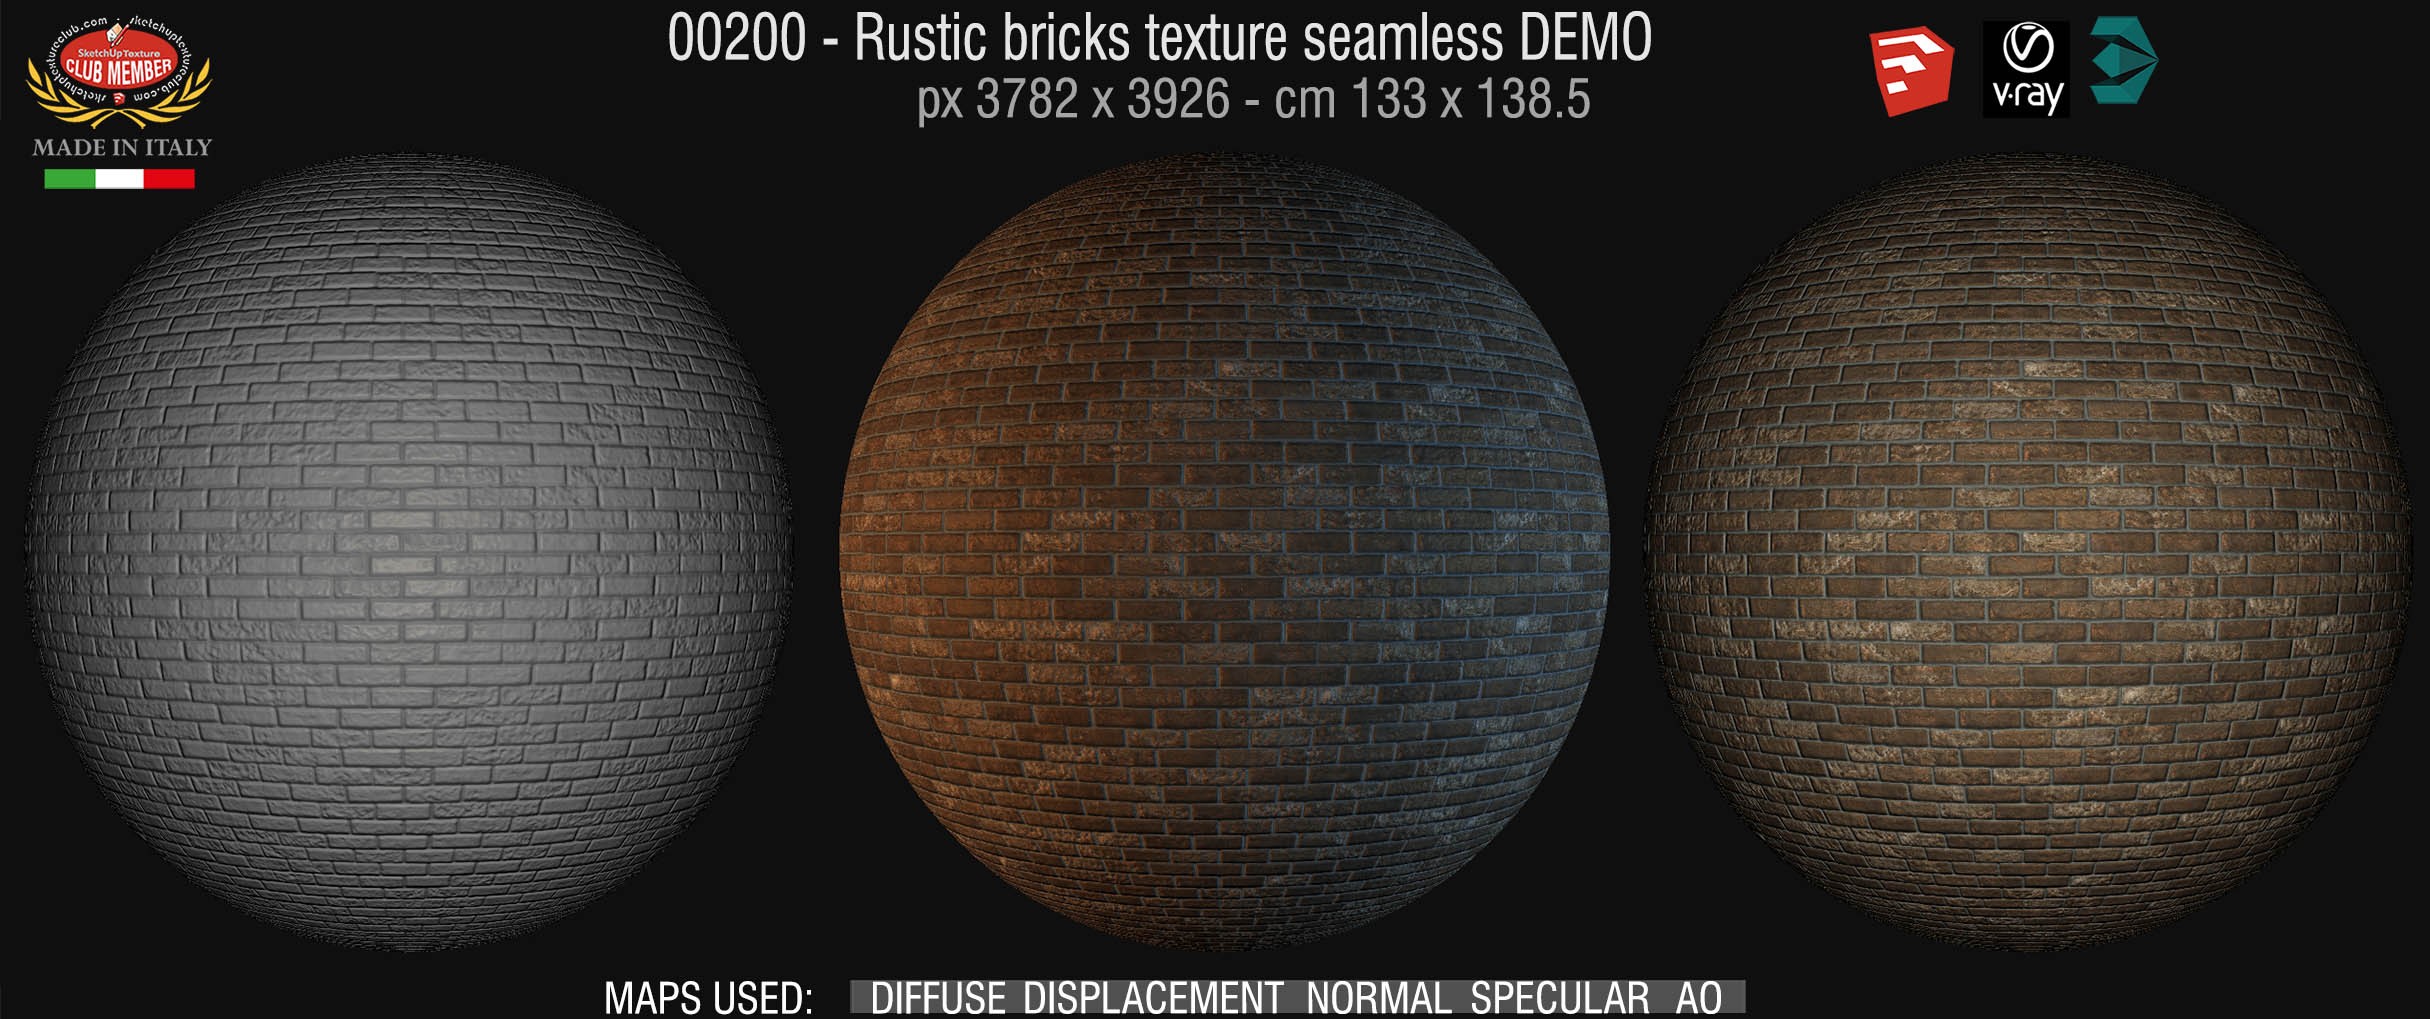 00200 Rustic bricks texture seamless + maps DEMO